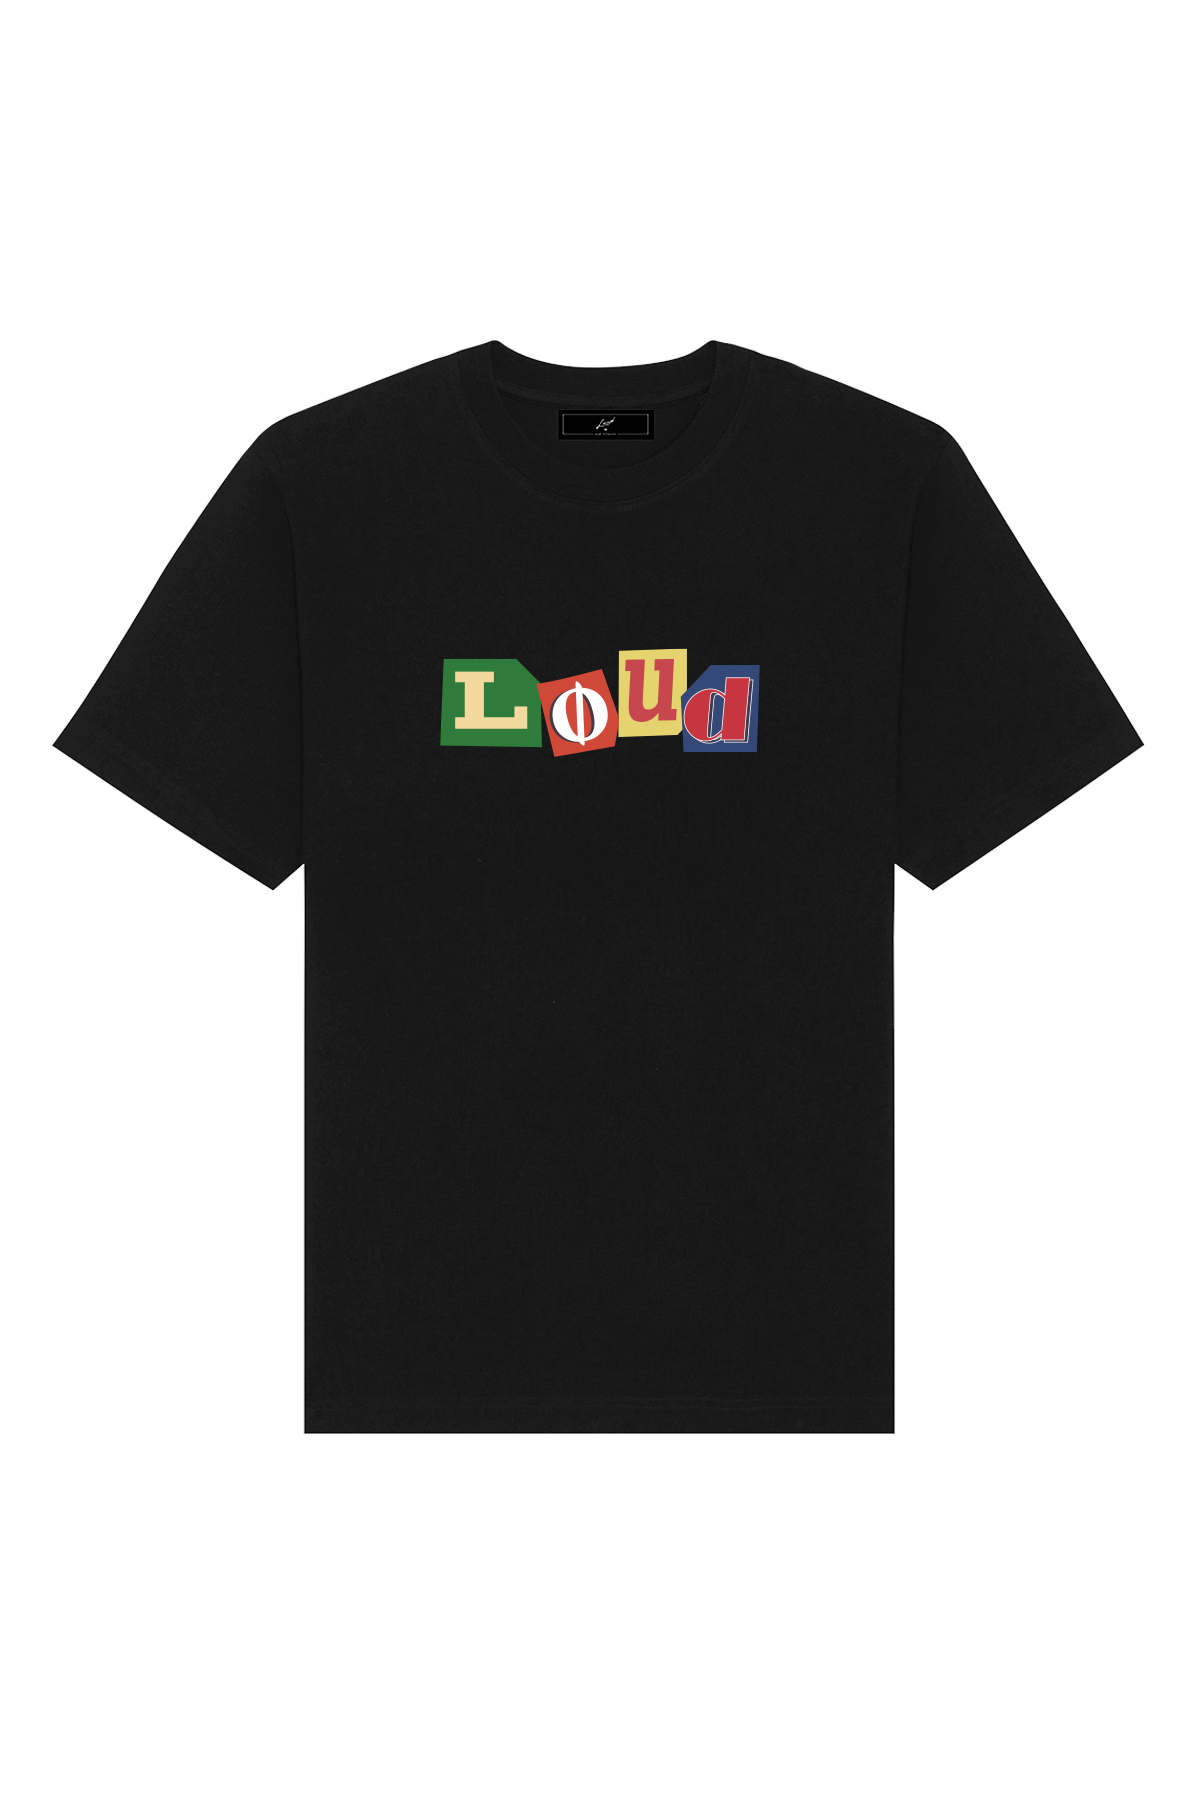 Loud Ransom T-Shirt - Black